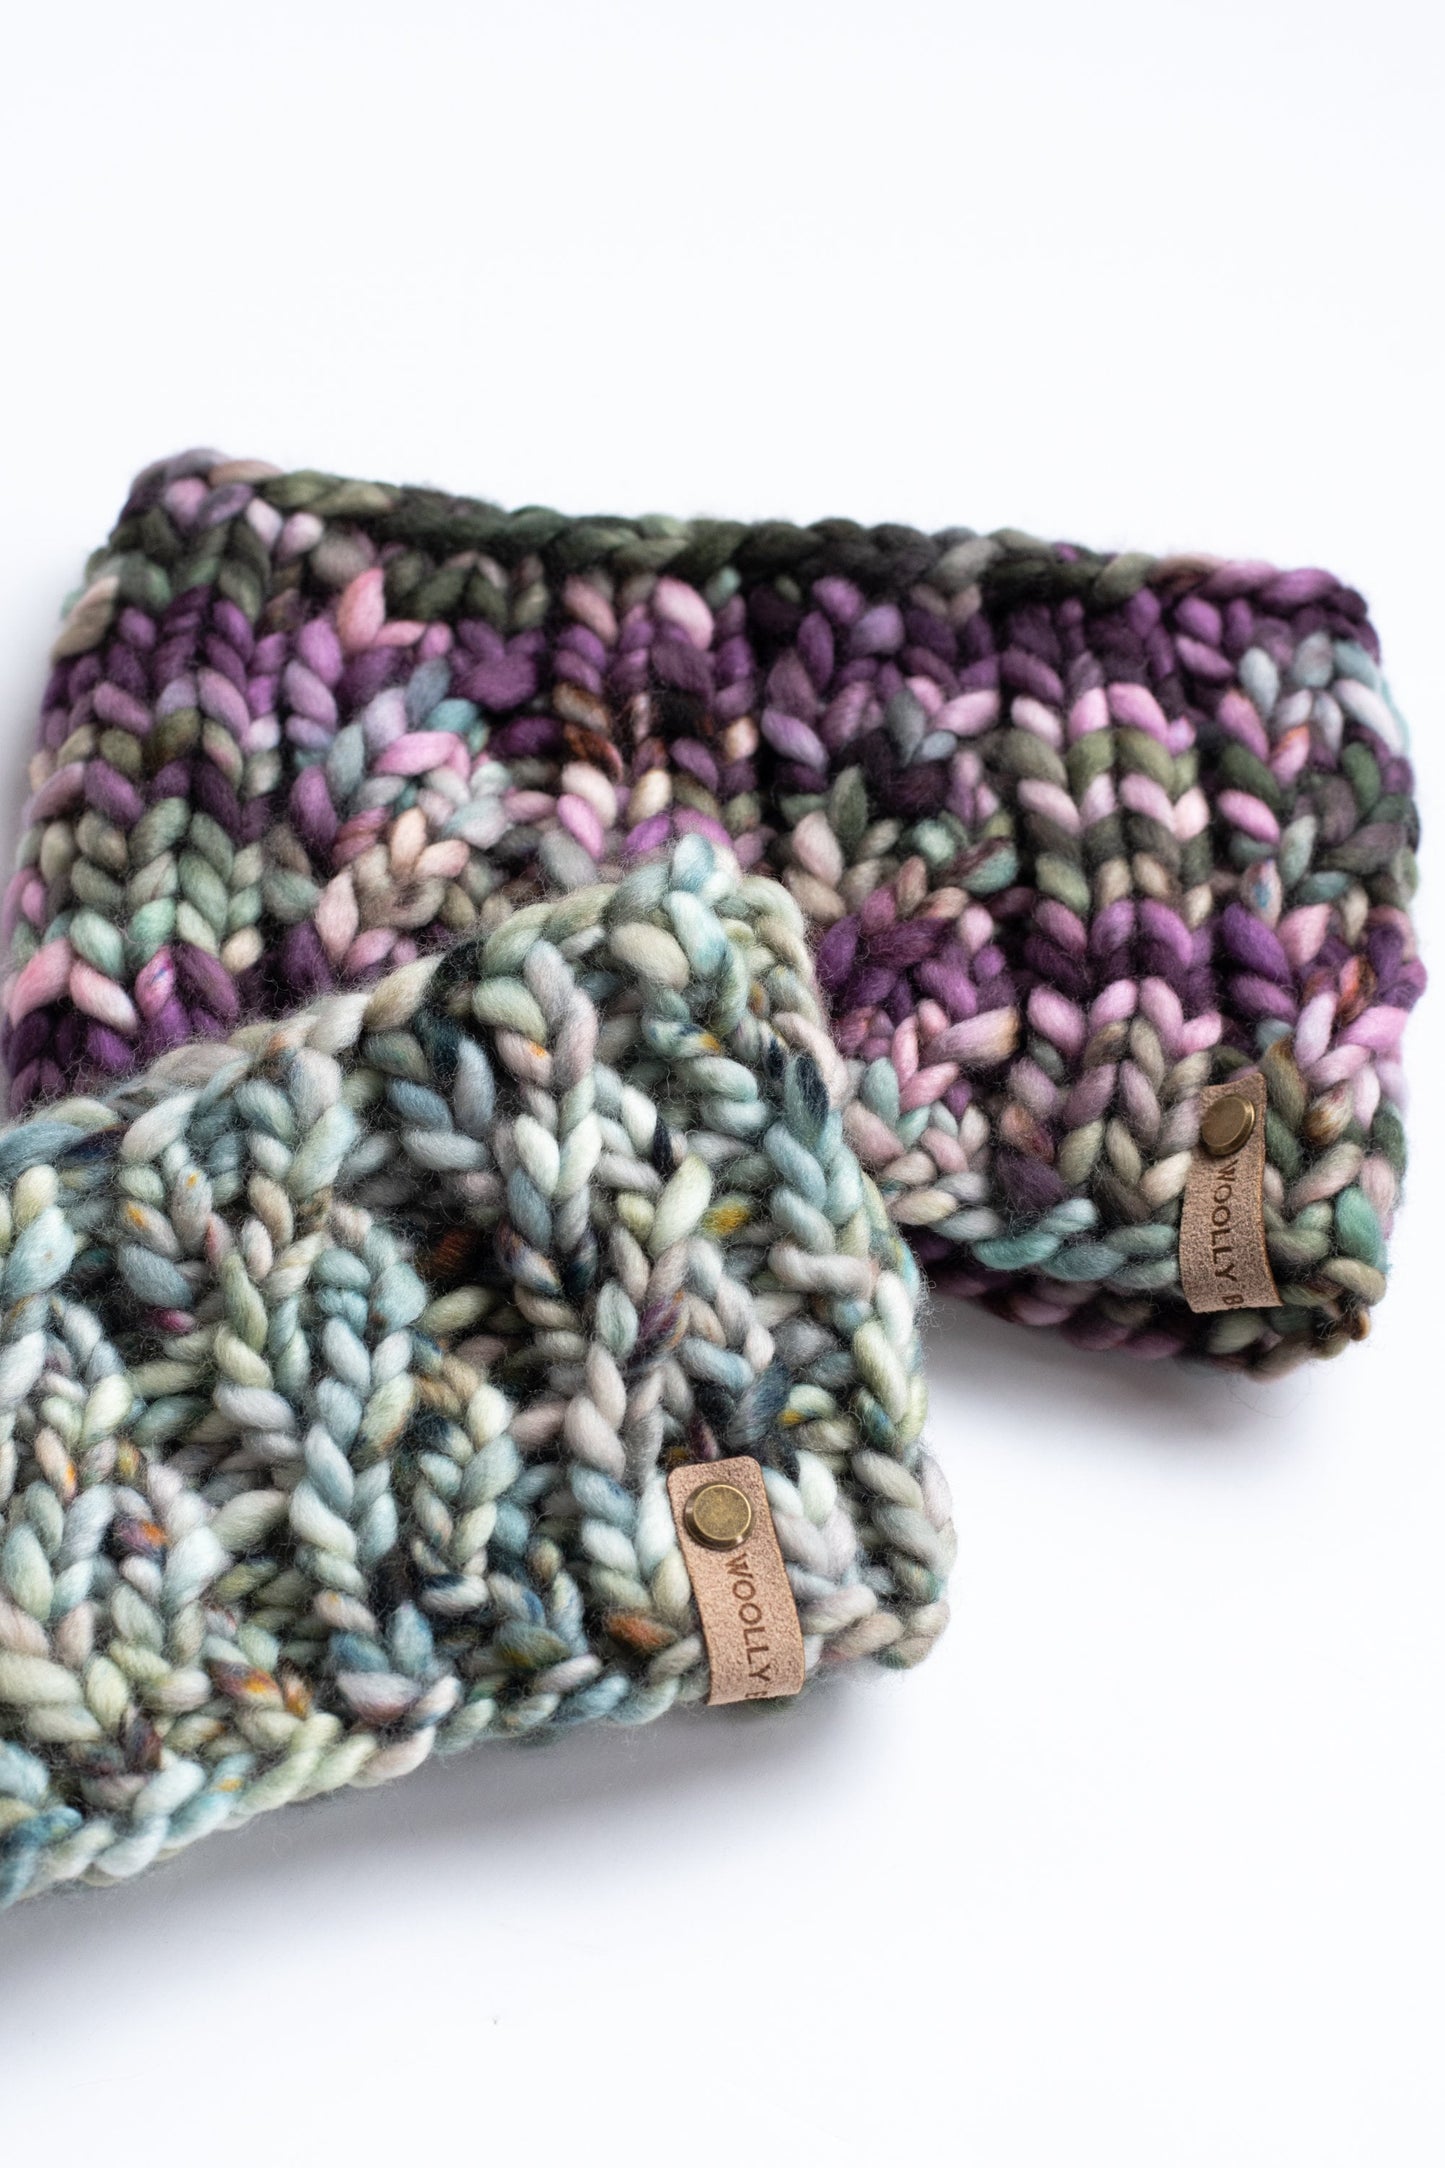 KNITTING PATTERN BUNDLE: 4 Knitting Pattern Bundle, Easy Knit Headband Patterns, Easy Super Bulky Weight Yarn Ear Warmer Knitting Patterns